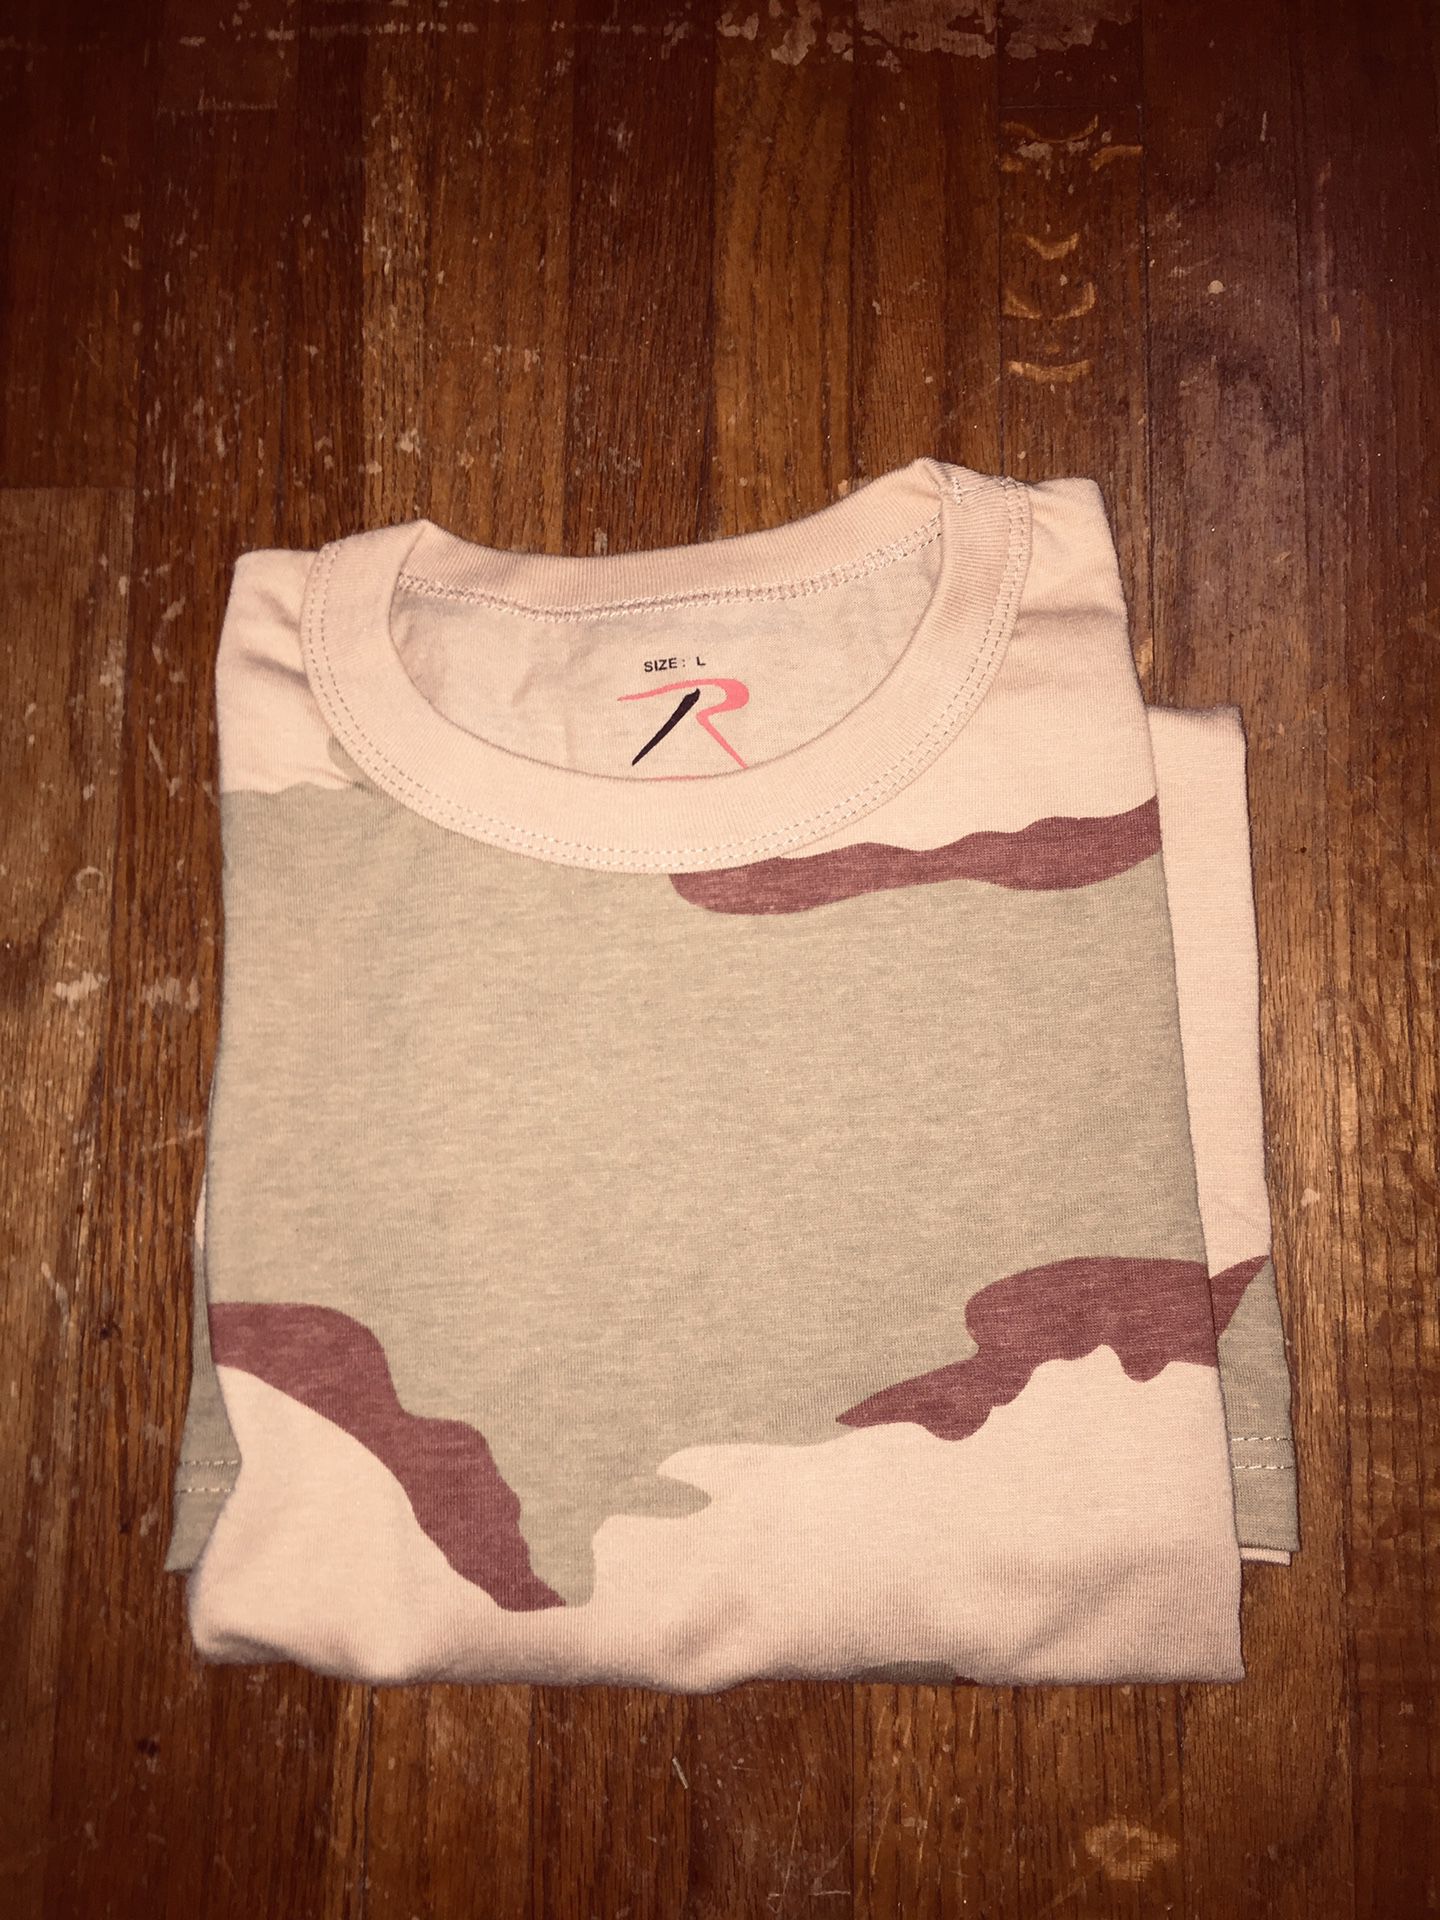 Men’s brand new camo T-Shirt